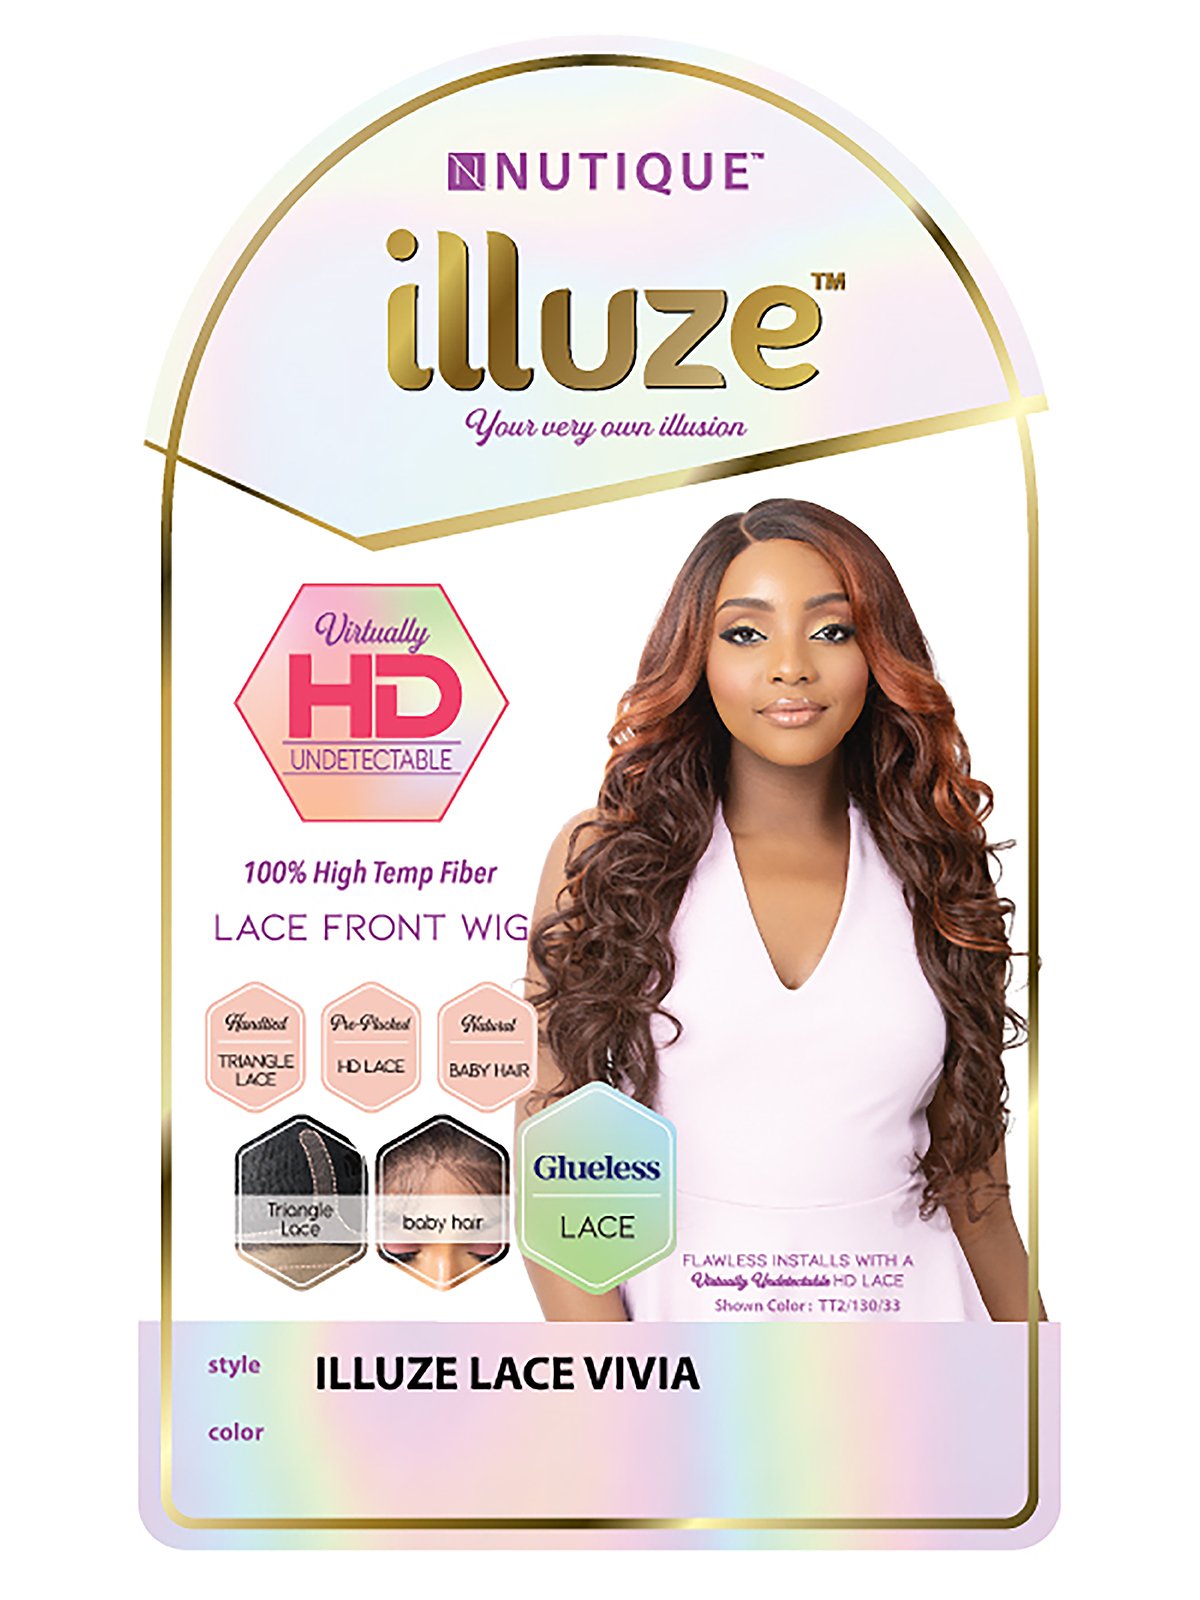 It's a Wig - Nutique Illuze HD lace Front Wig Synthetic Hair VIVIA